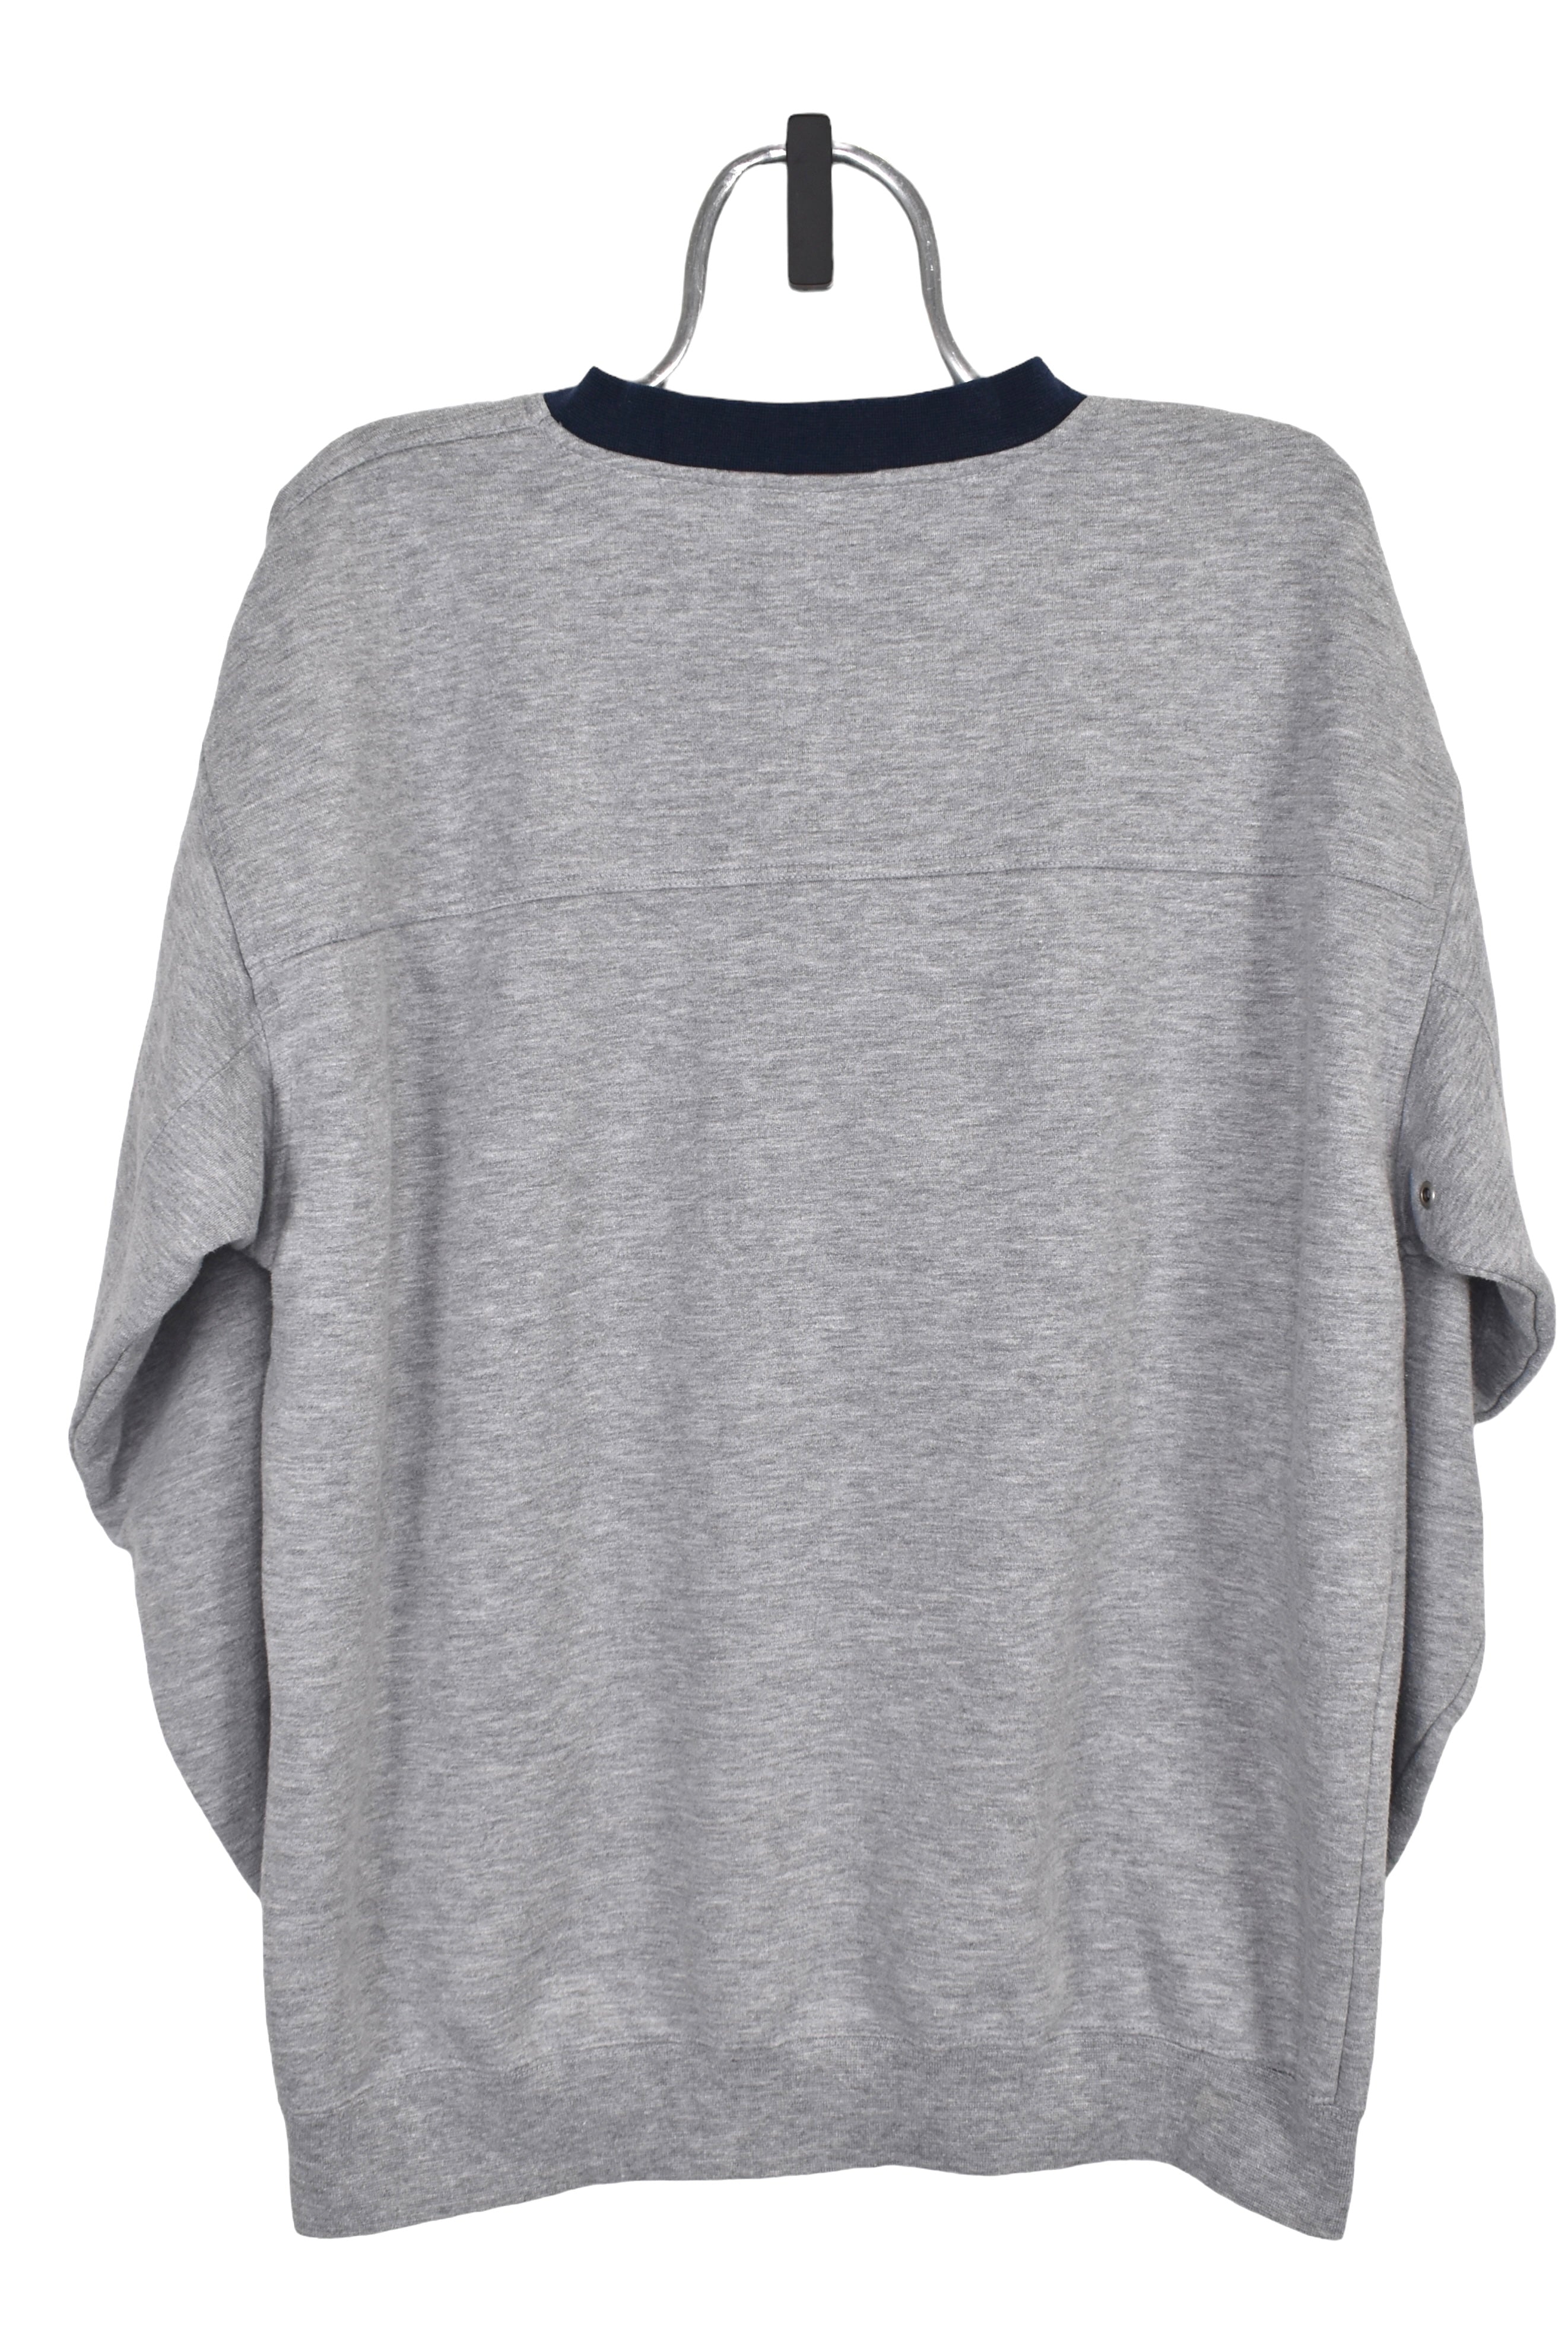 Vintage Denver Broncos sweatshirt (XL), grey NFL embroidered crewneck